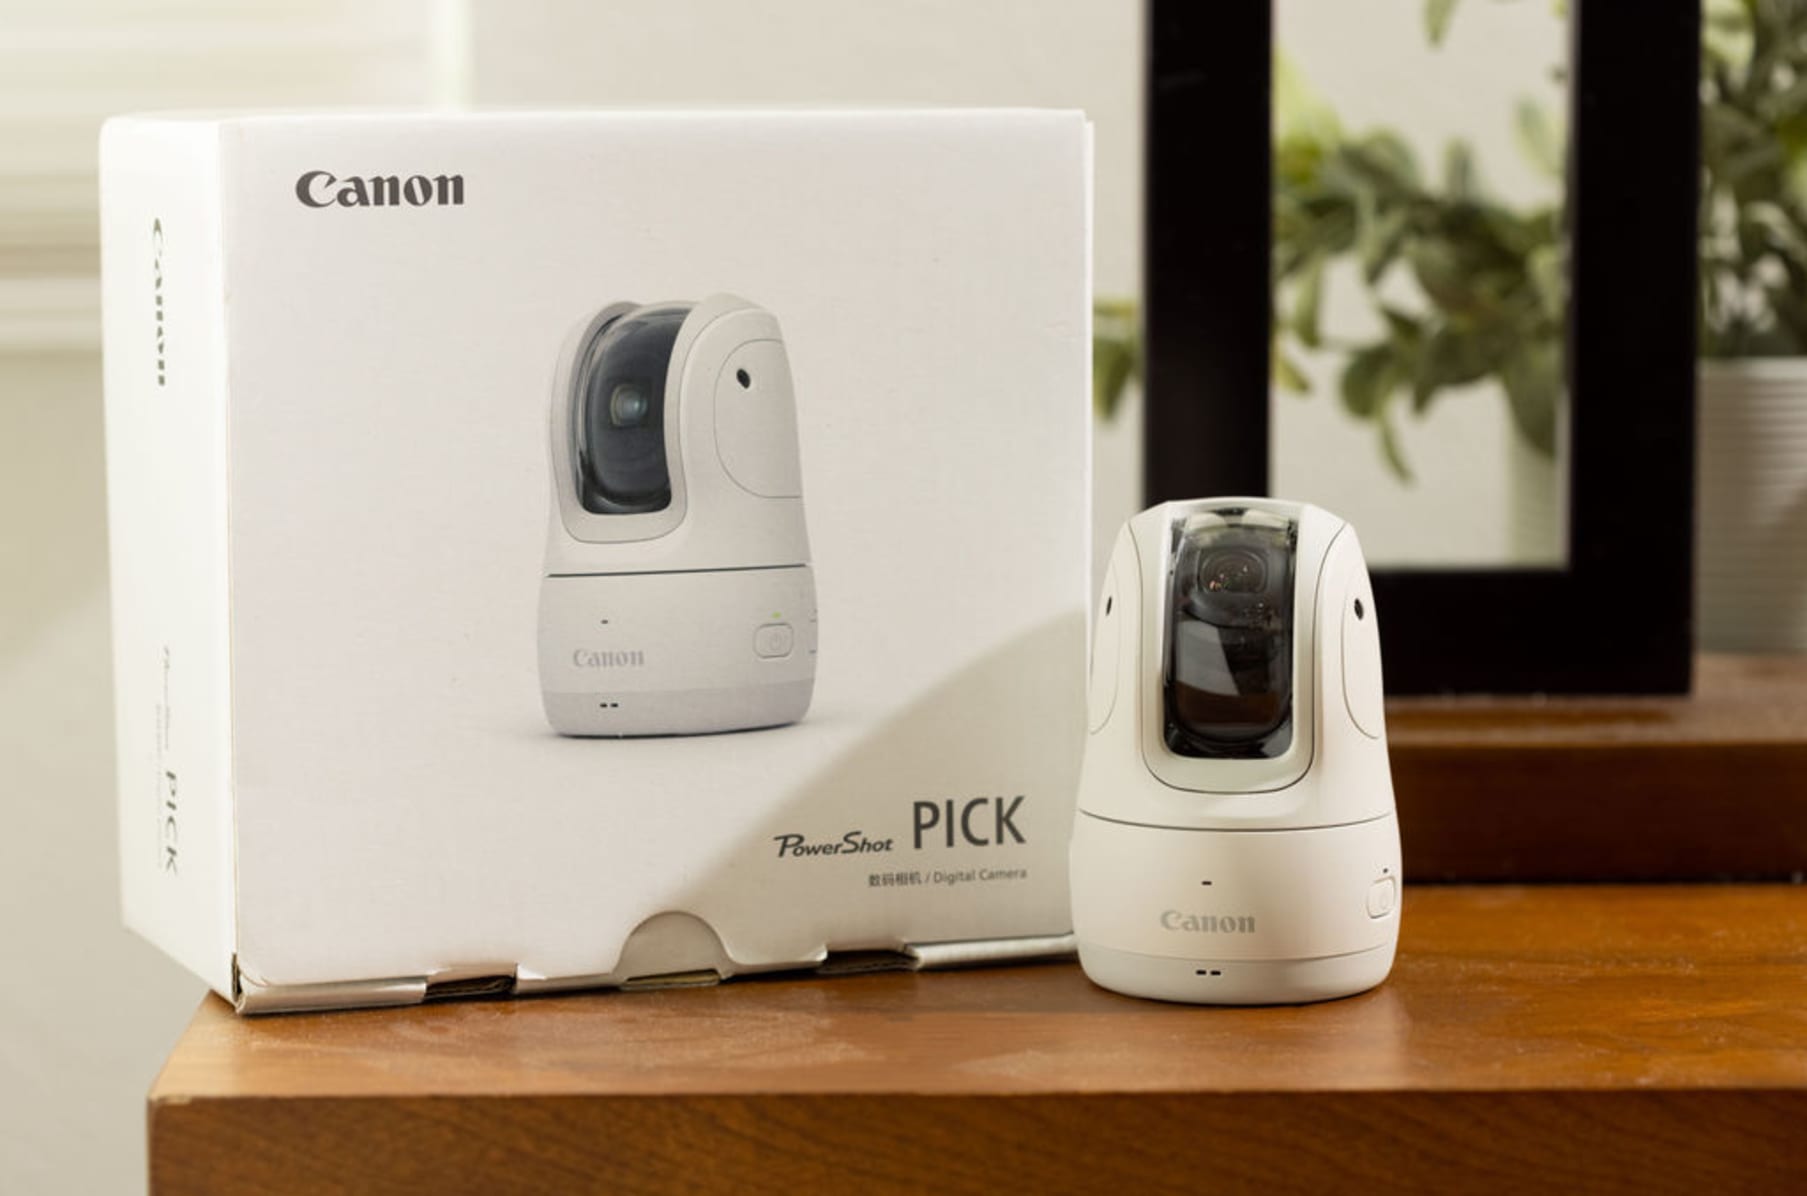 Canon PowerShot PICK: Capture Candid Moments | Indiegogo